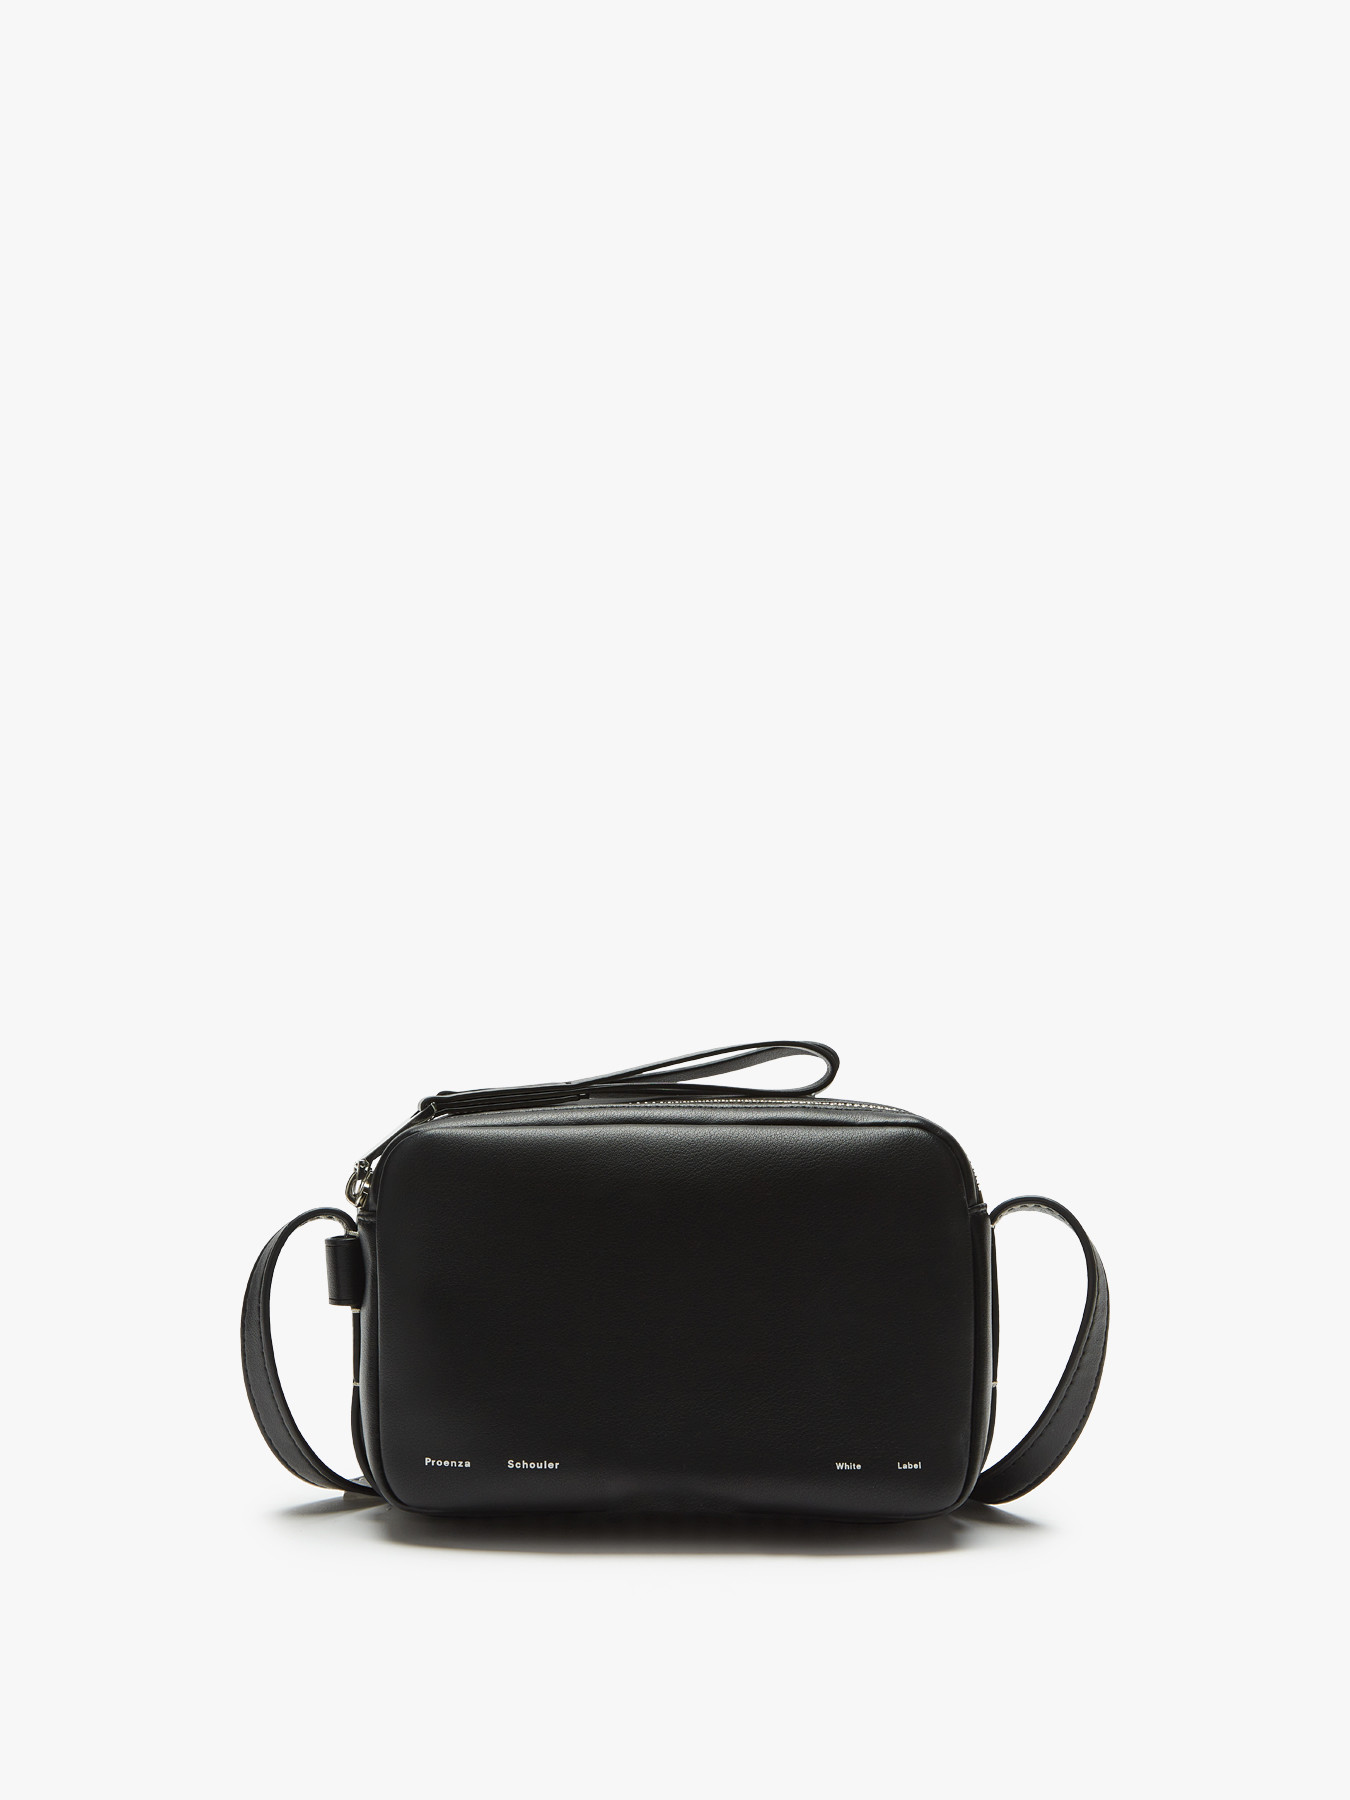 Proenza Schouler White Label Watts Leather Camera Bag Black